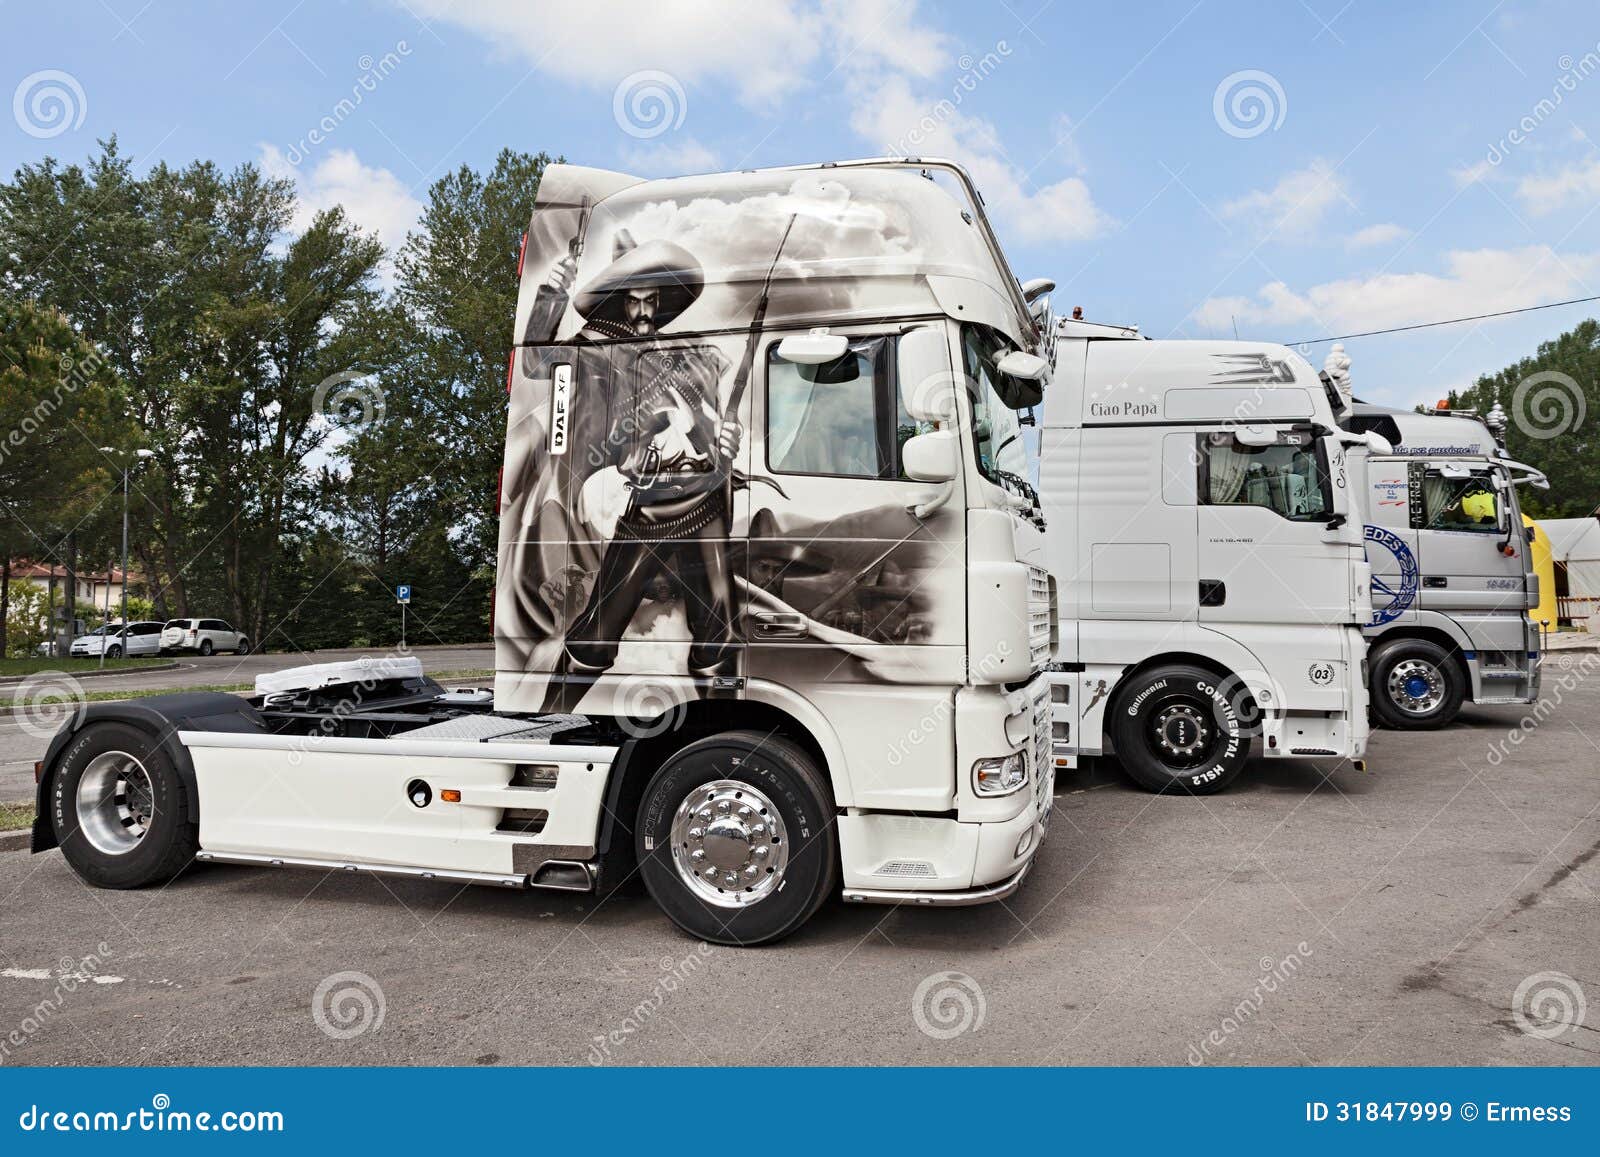  - painted-tractor-trailer-shiny-trucks-parked-truck-rally-rombo-rock-june-riolo-terme-ra-italy-31847999